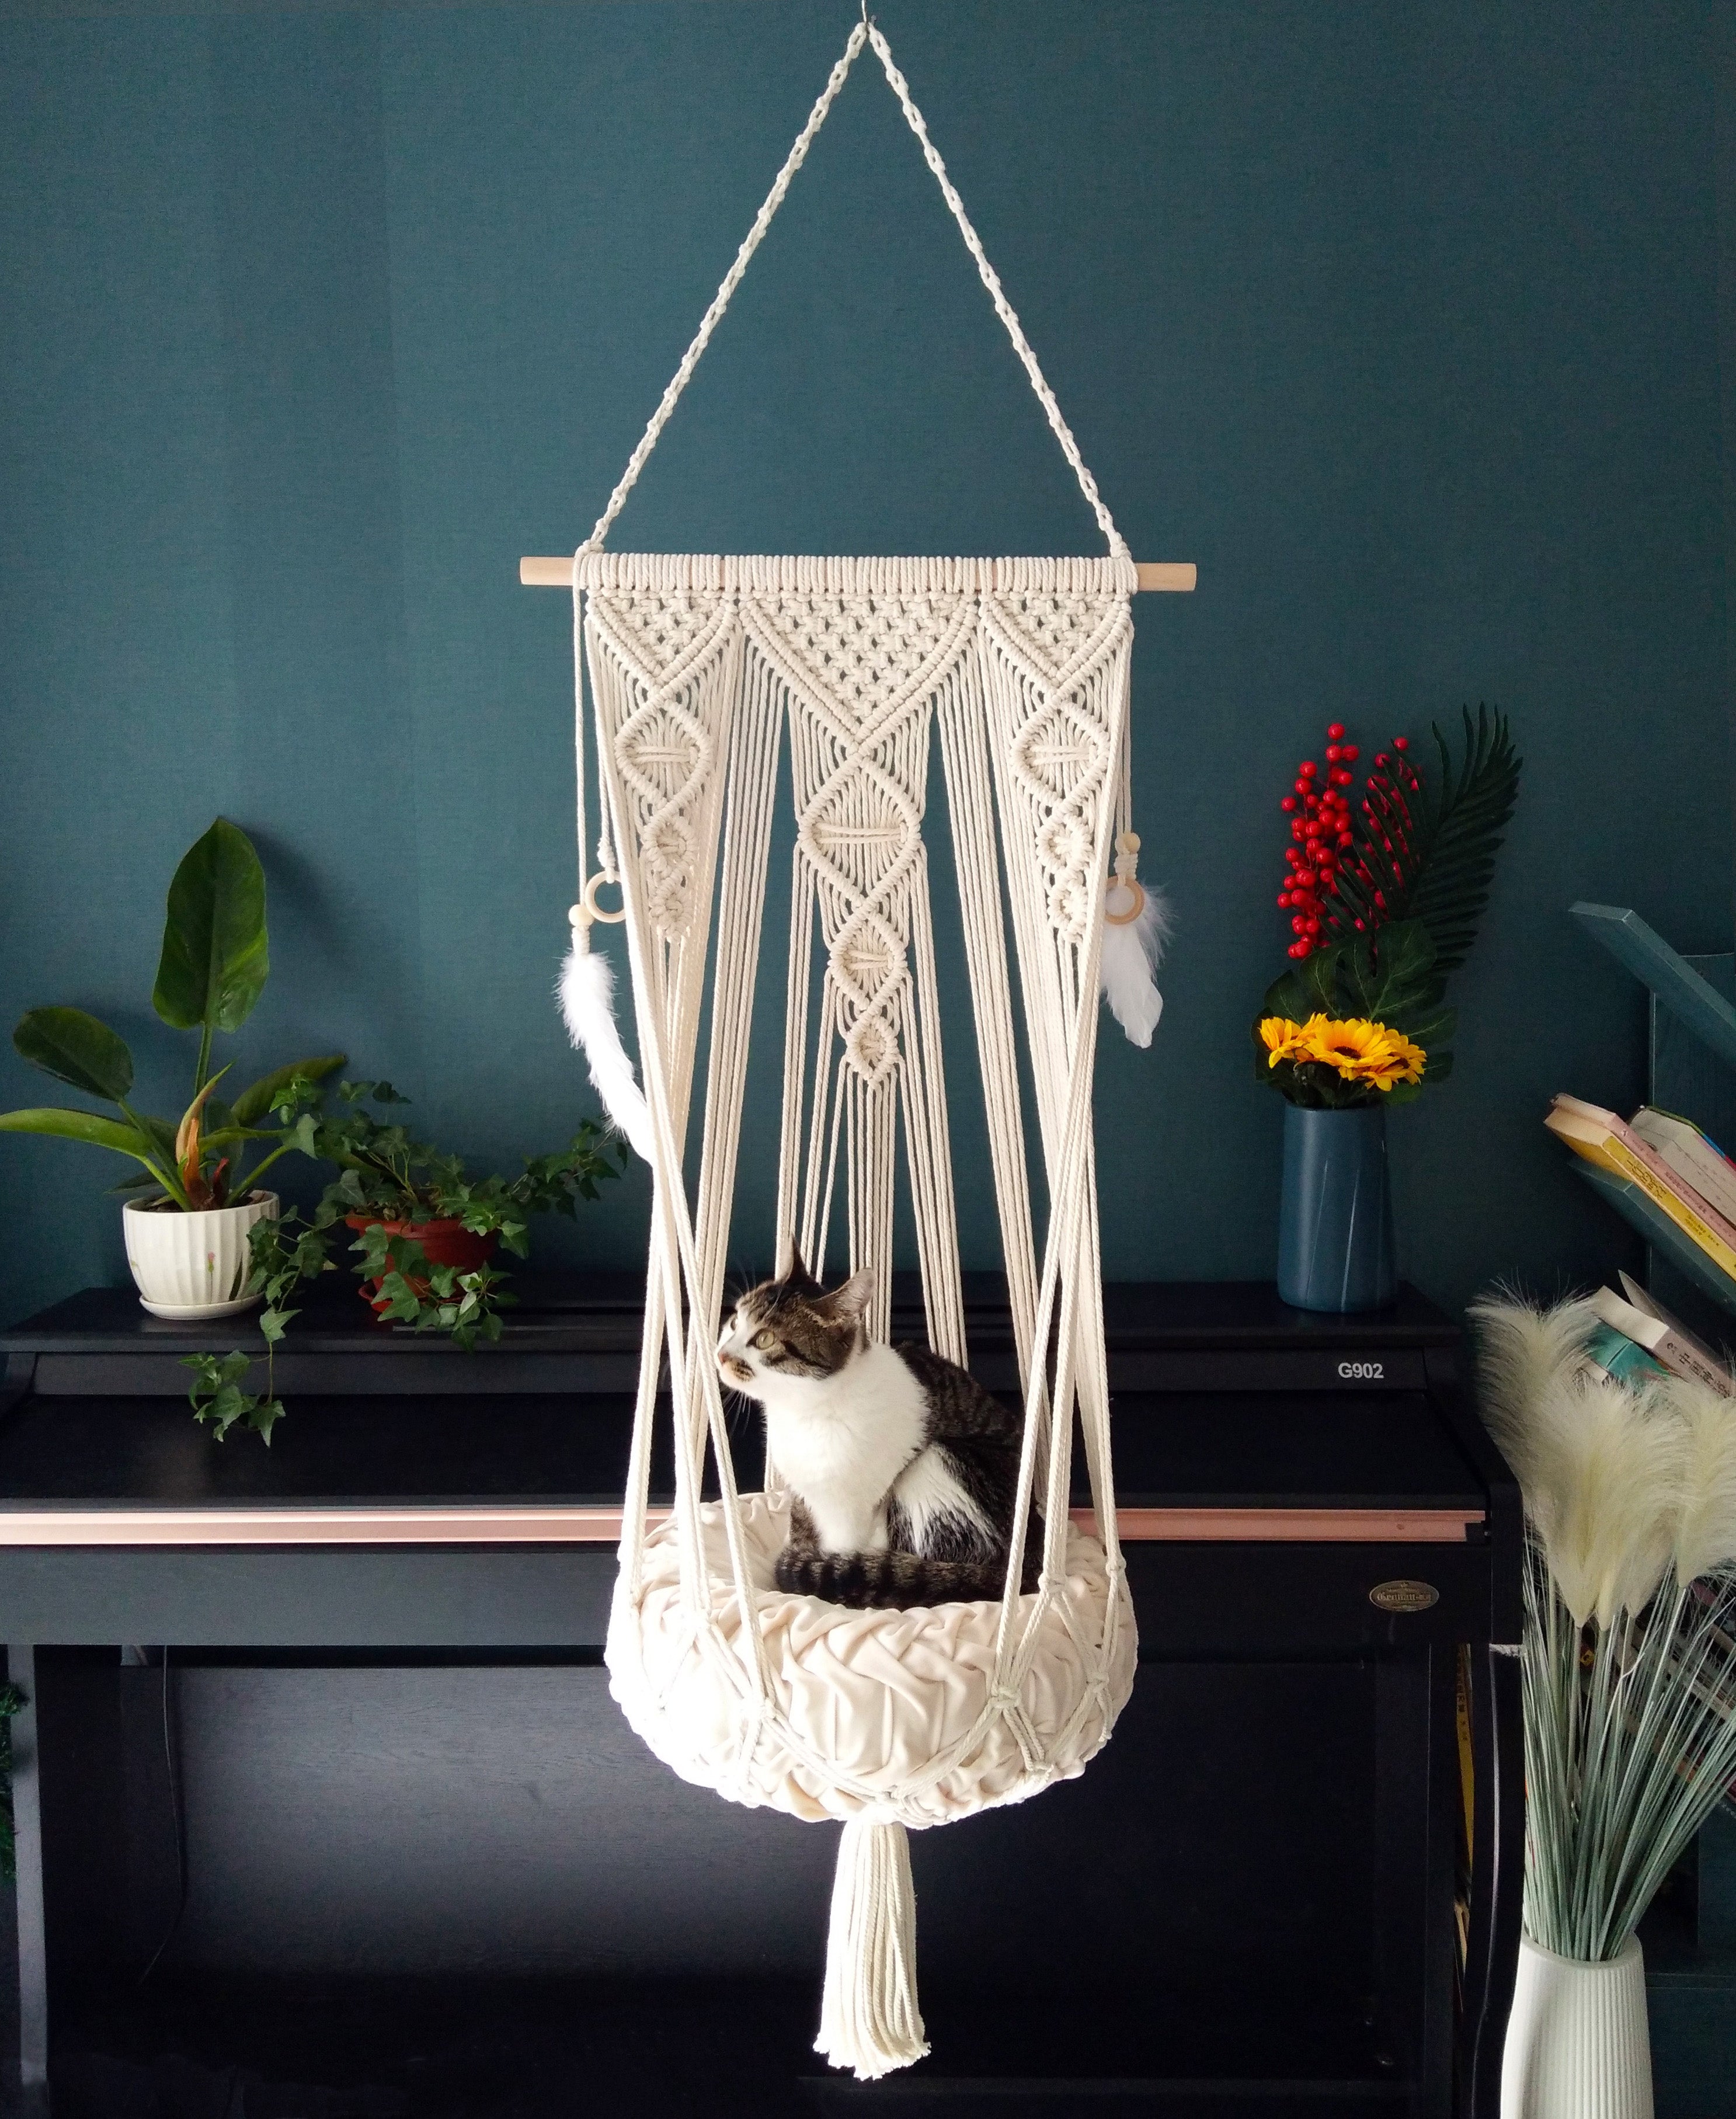 Macrame cat Hammock bed,Macrame cotton rope Swing Bed for cat,indoor pet's sleeping bed wall hanging